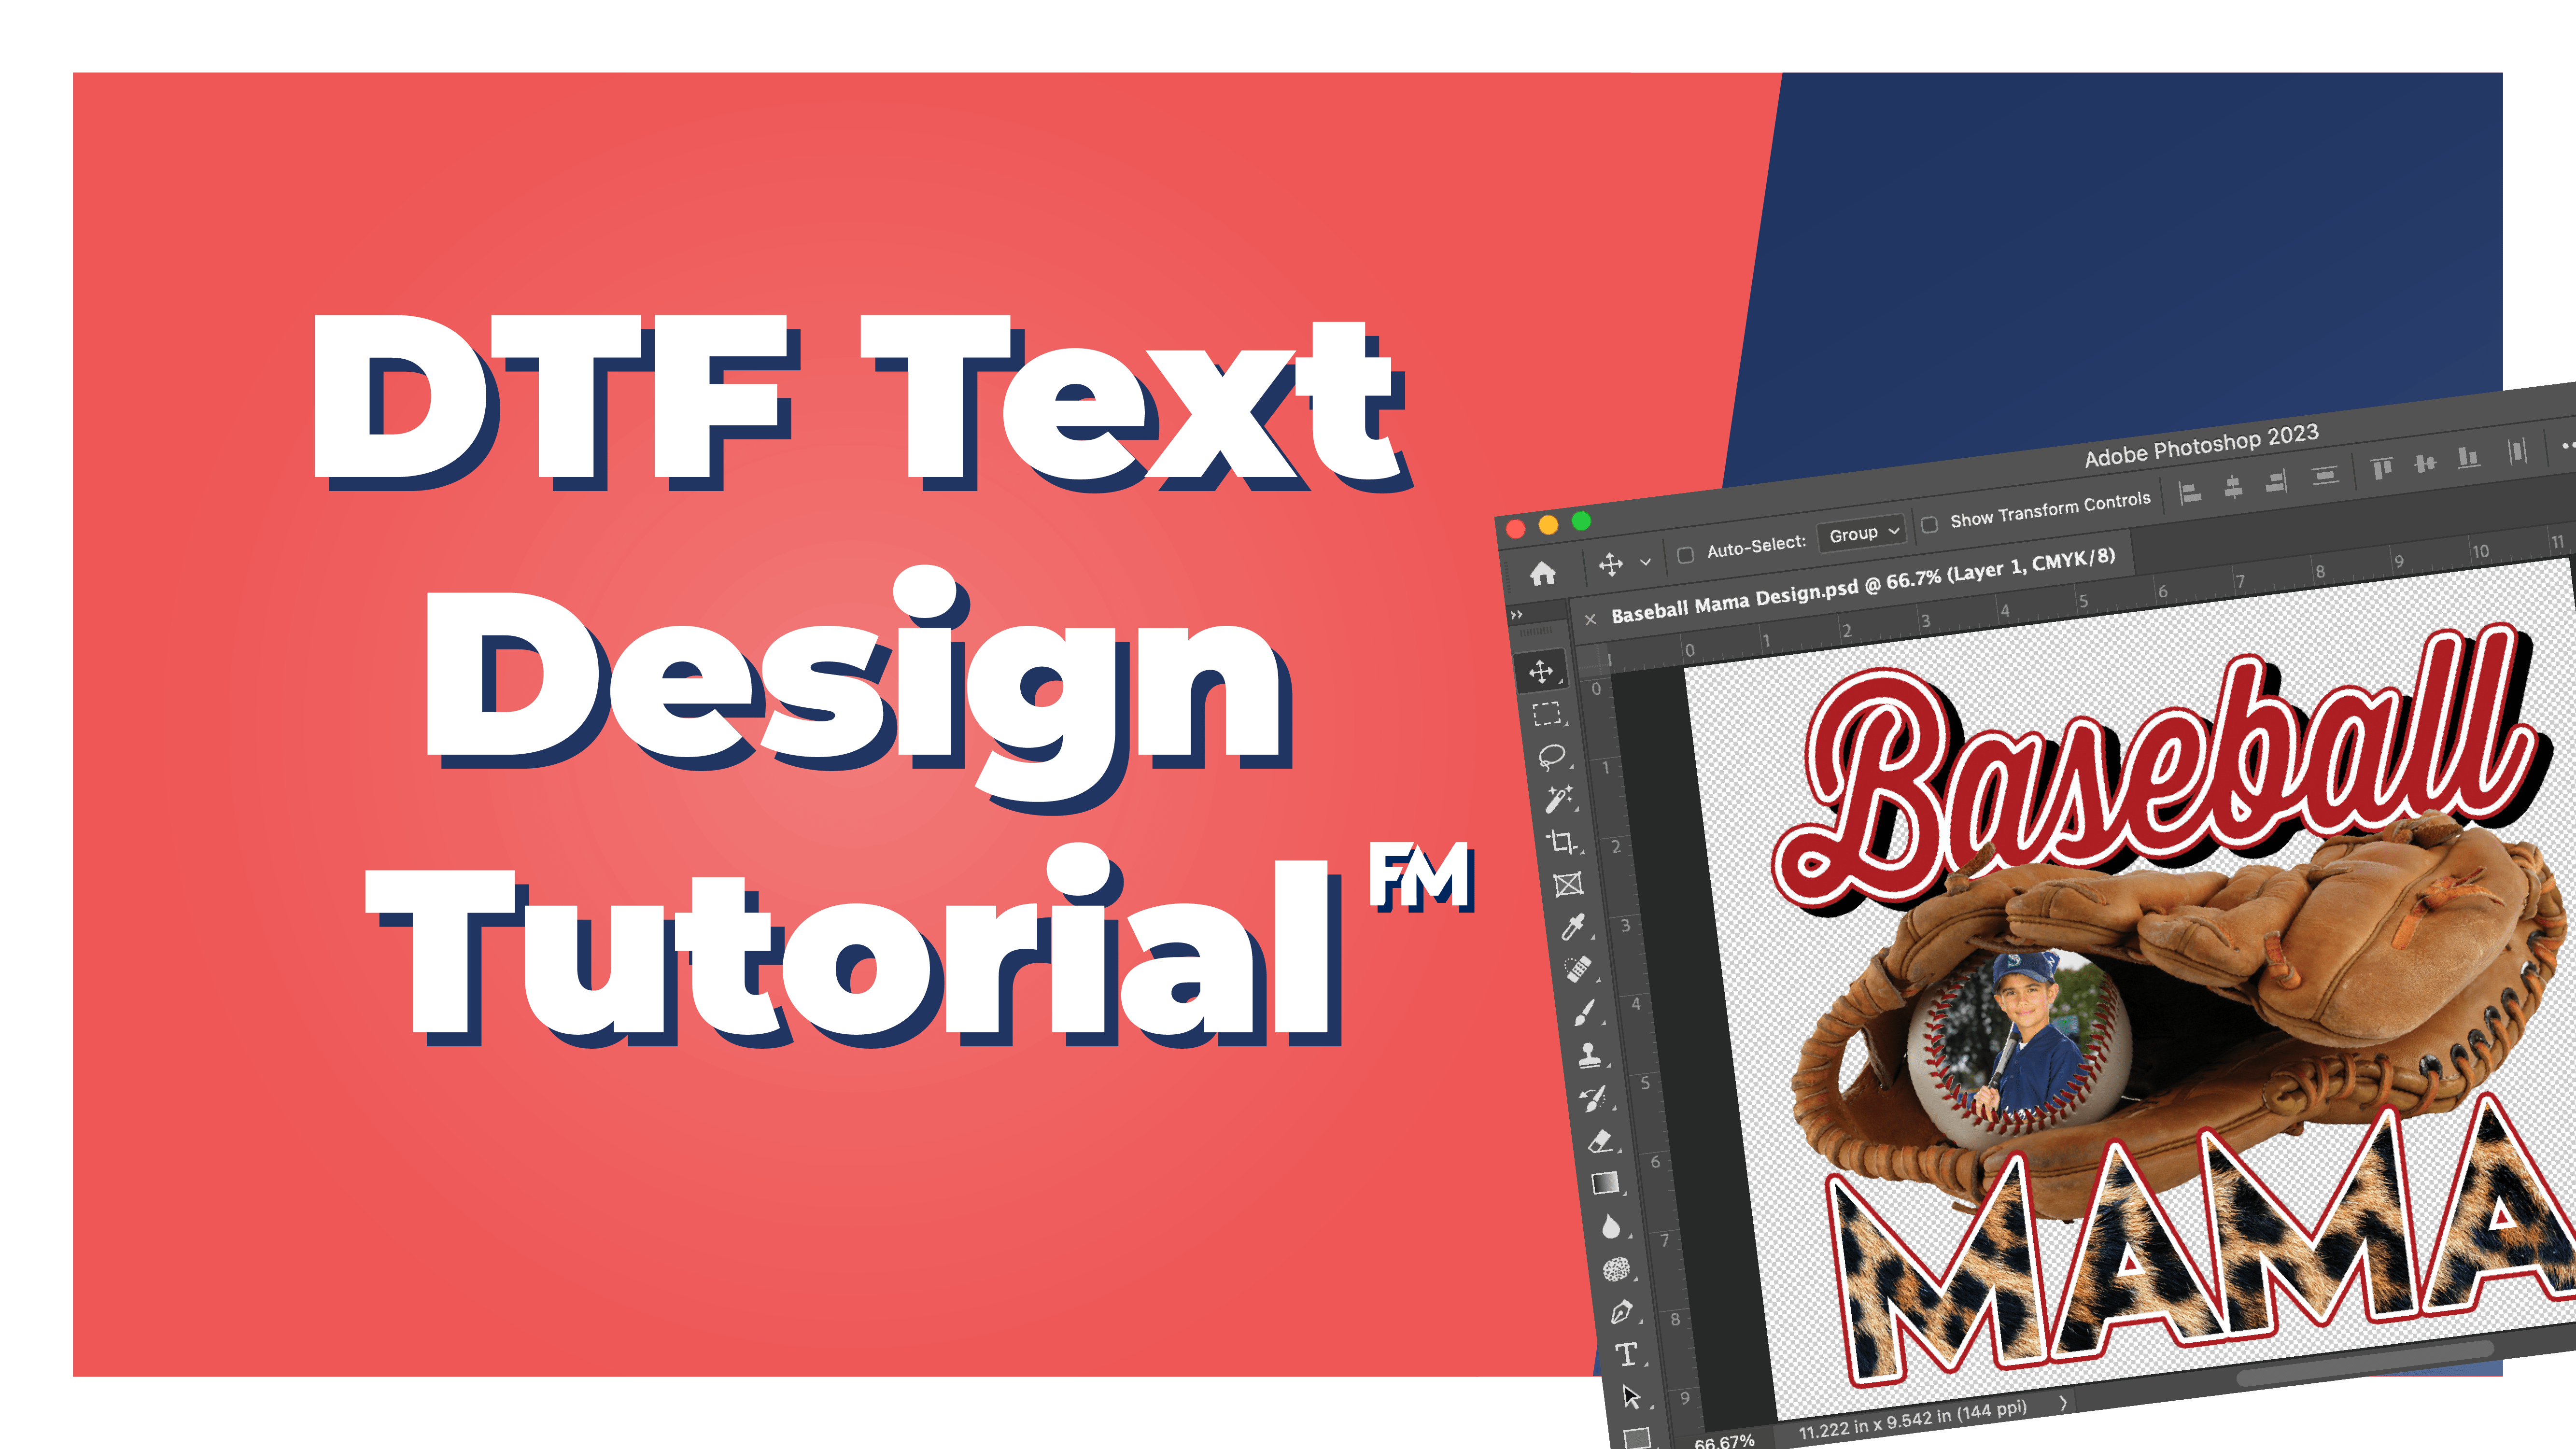 DTF Text Design Tutorial